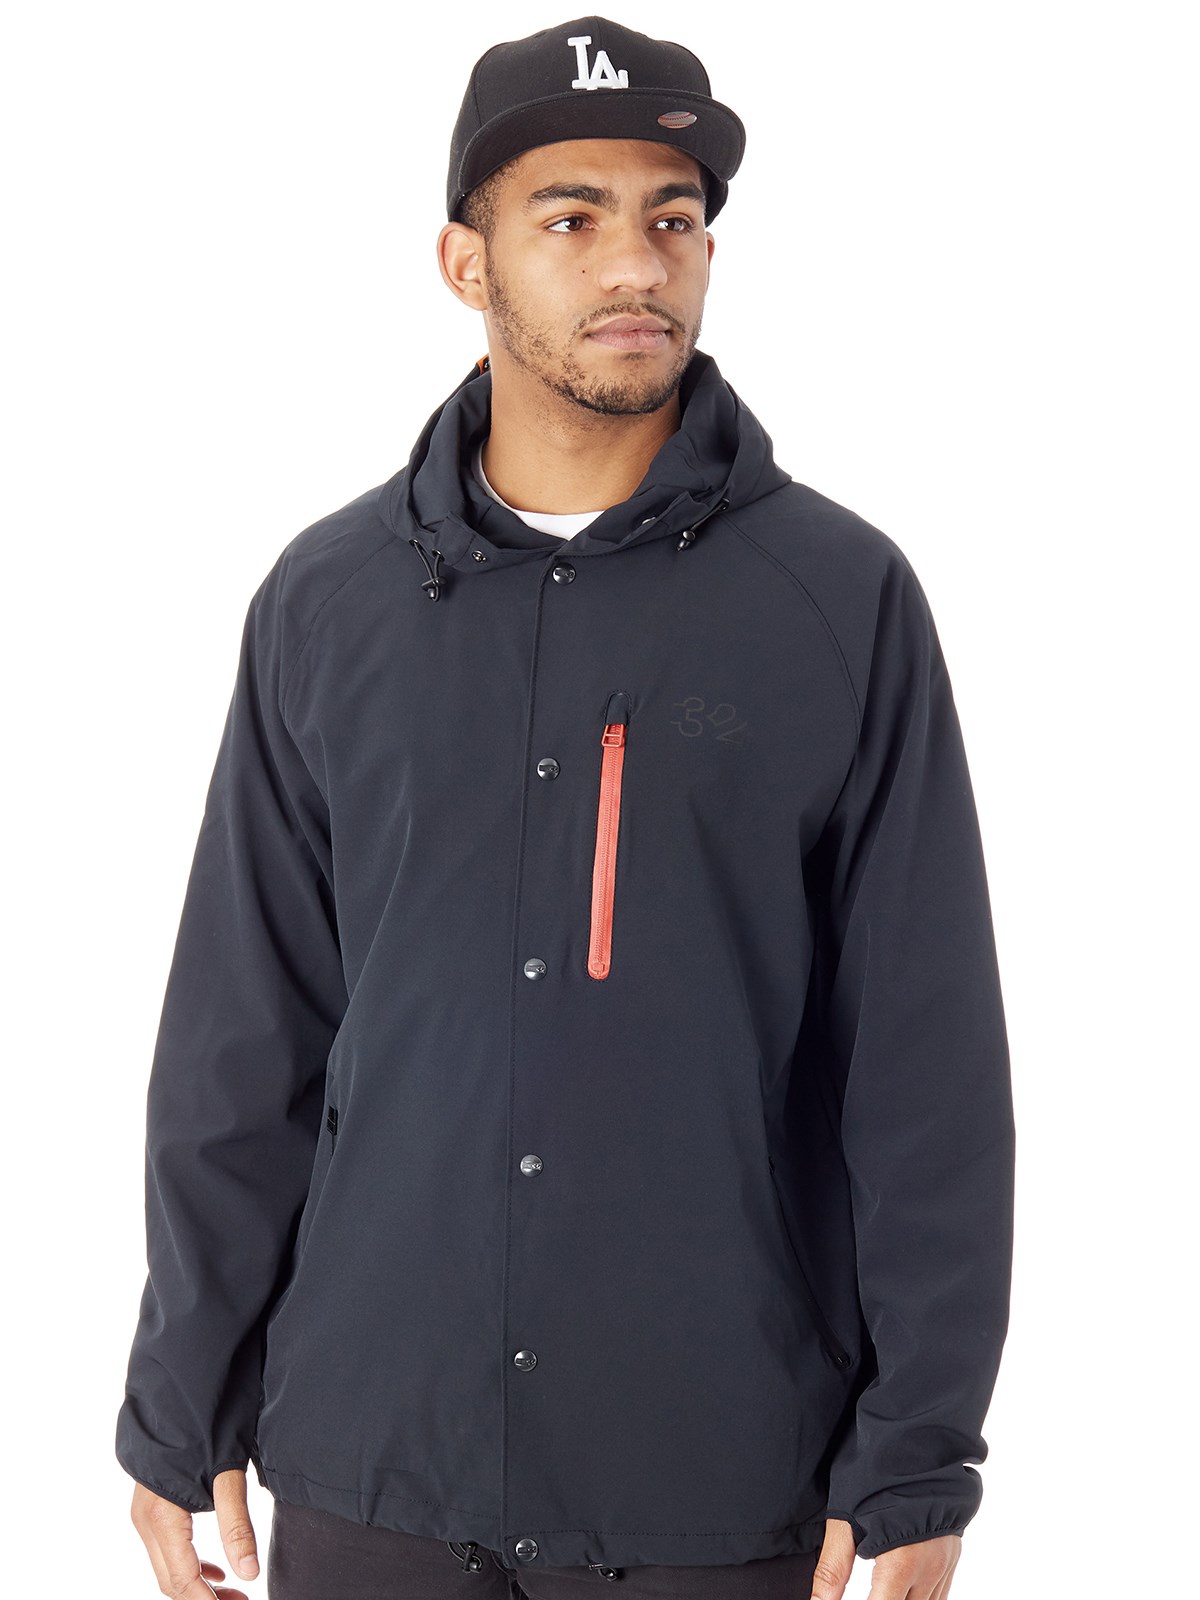 thirty-two-black-4ts-comrade-water-resistant-jacket-0-854bd-xl.jpg